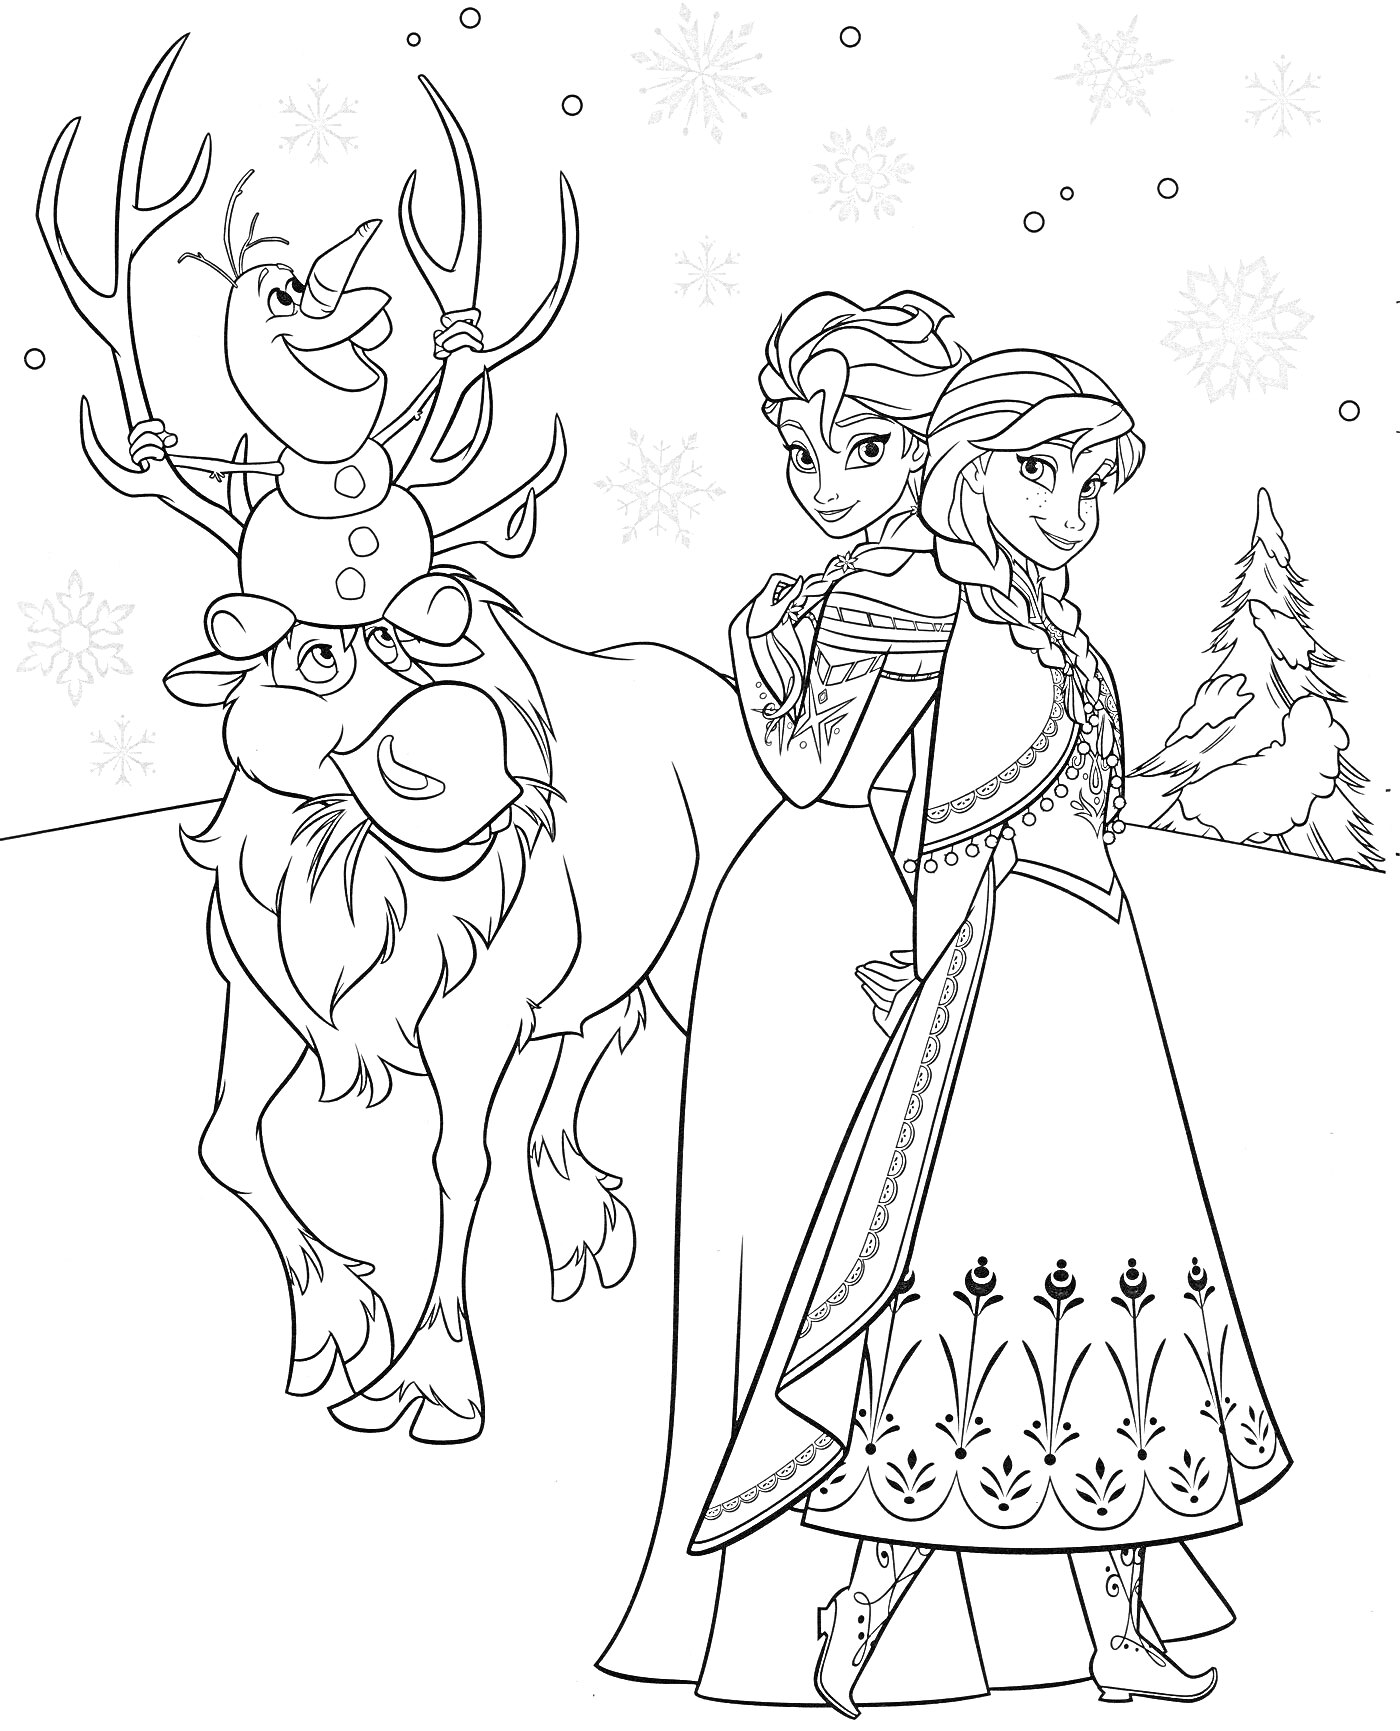 Две девушки, олень и снеговик на фоне снежного пейзажа